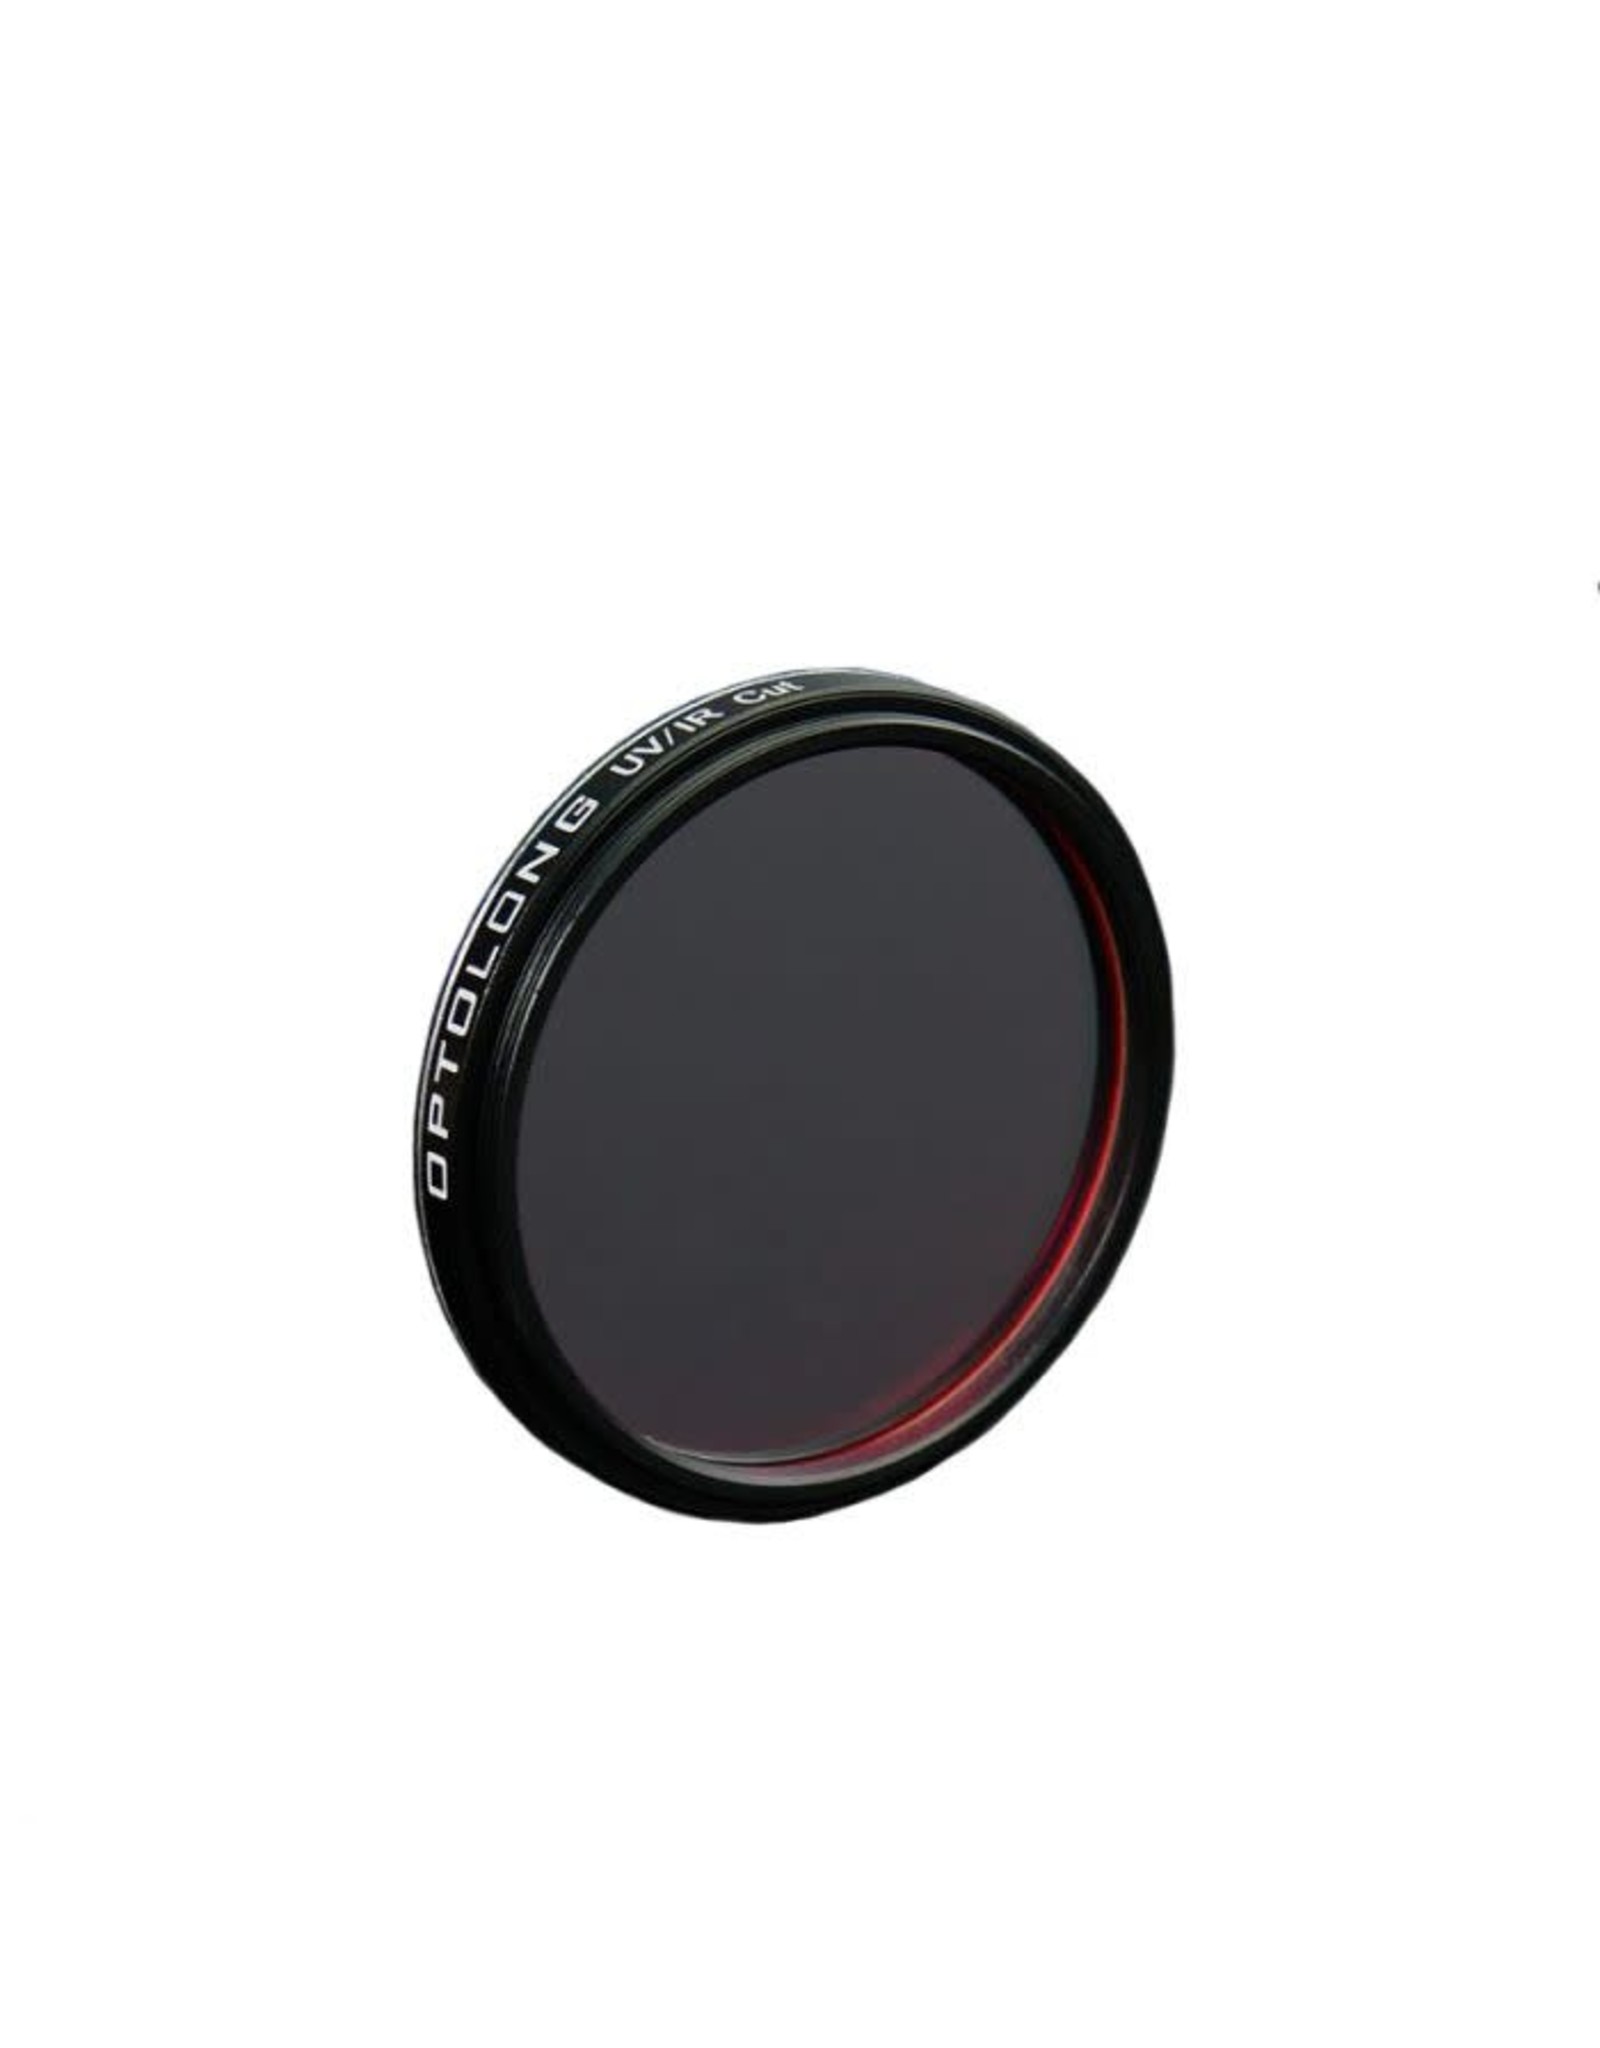 Optolong Optolong UV-IR Cut Filter - 1.25" Mounted - UVIR-125